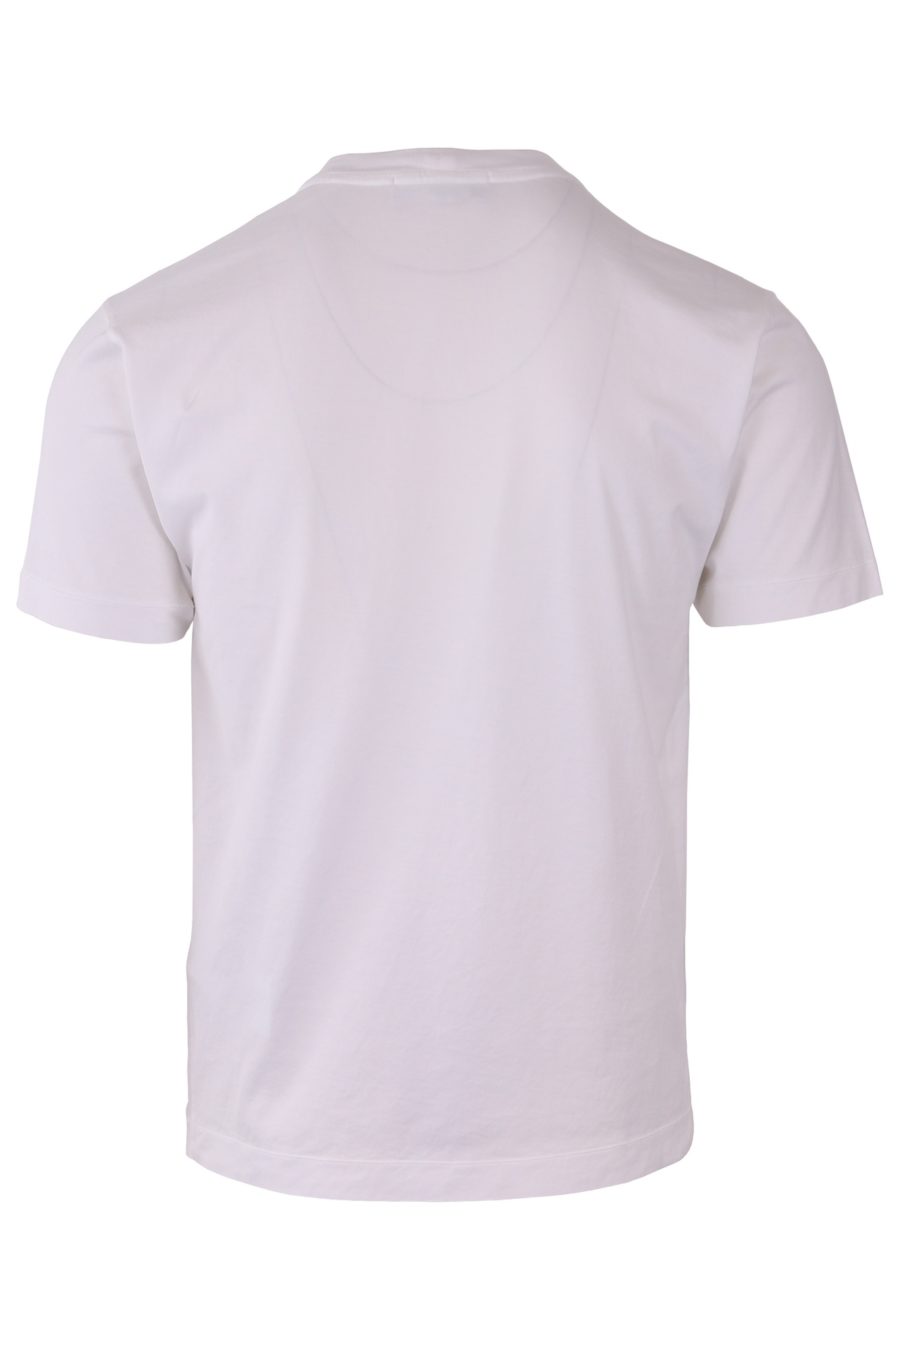 Stone Island T-shirt blanc avec patch logo - efc980a7b126e799a38006f3cd825945d6fab36c